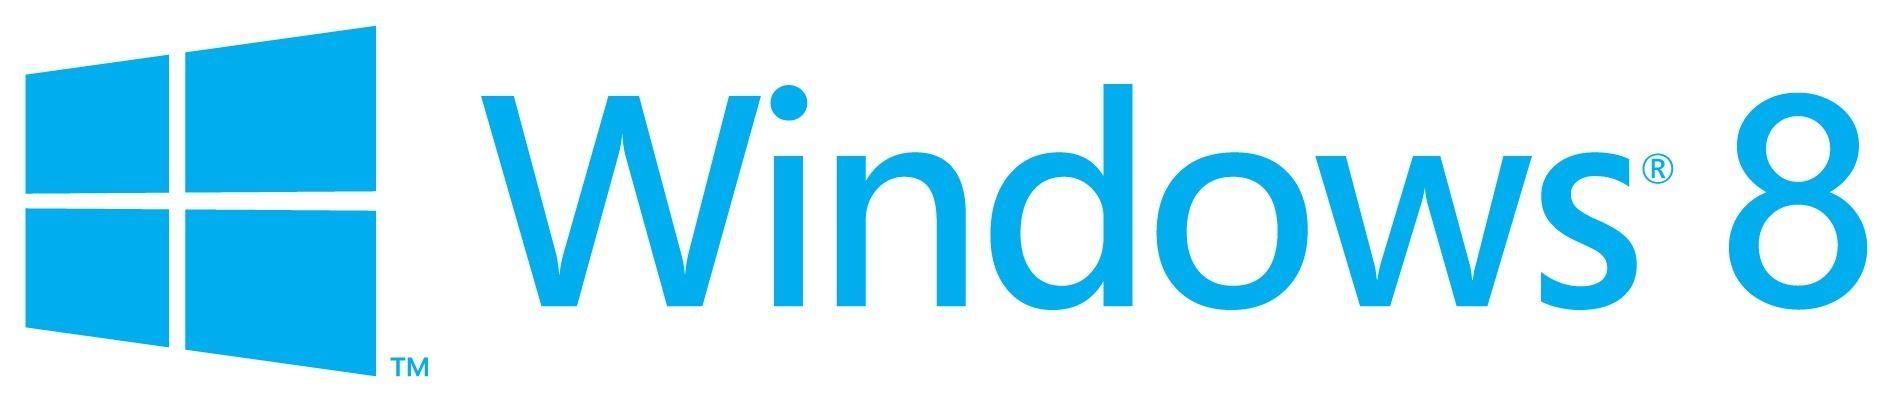 New Windows 8 Logo - New Windows 8 Logo Is Pure Genius | PCWorld